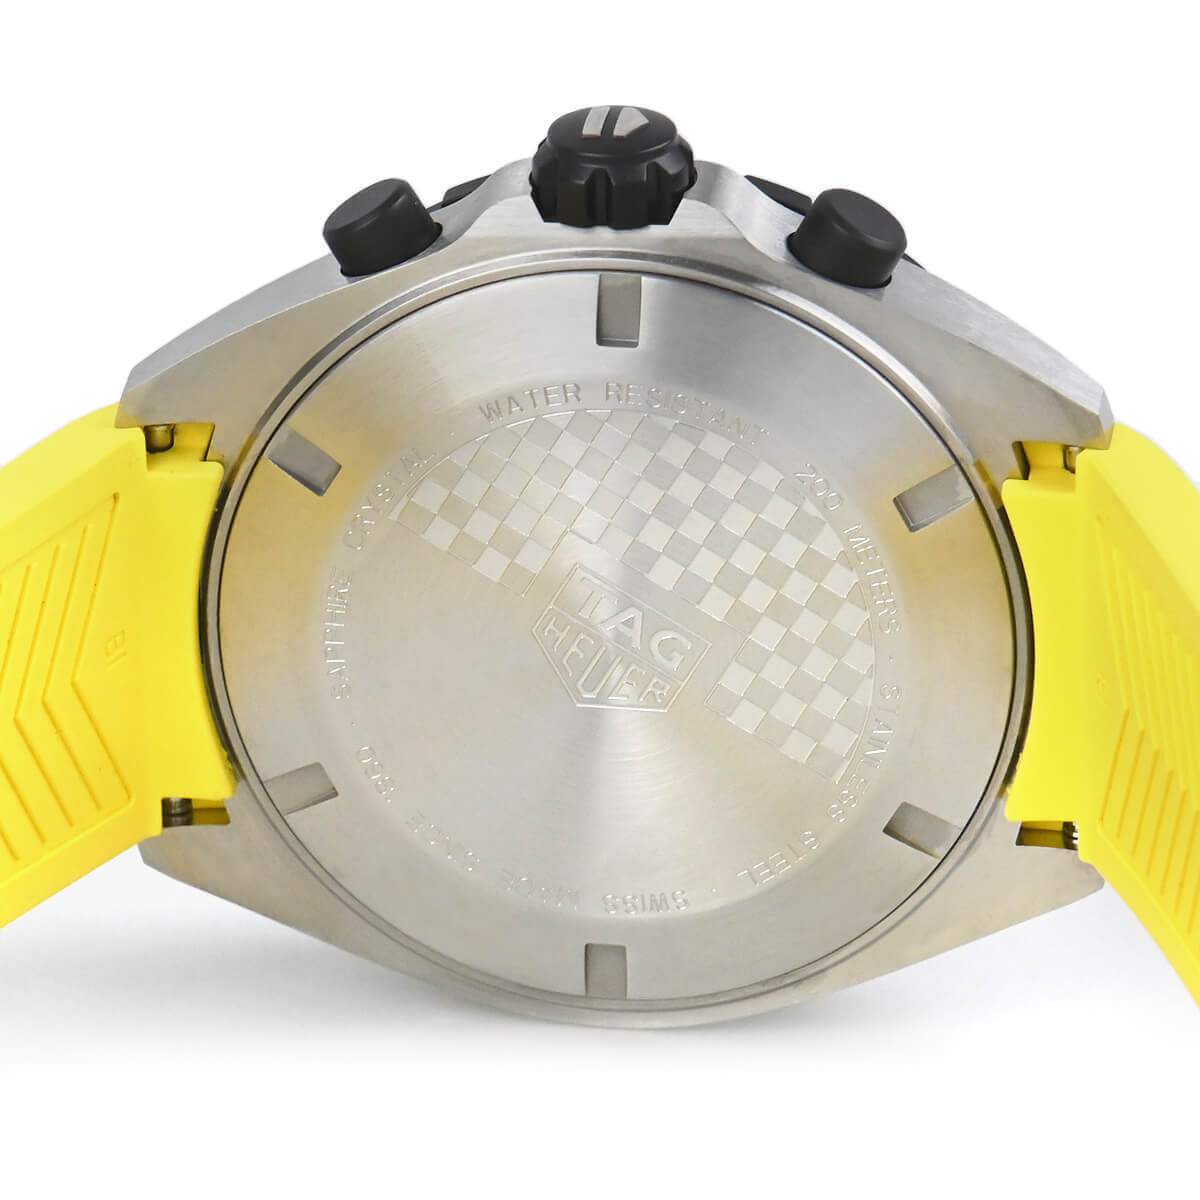 TAG Heuer Formula 1 Quartz | Yellow Dial Watch | Harley's Time LLC